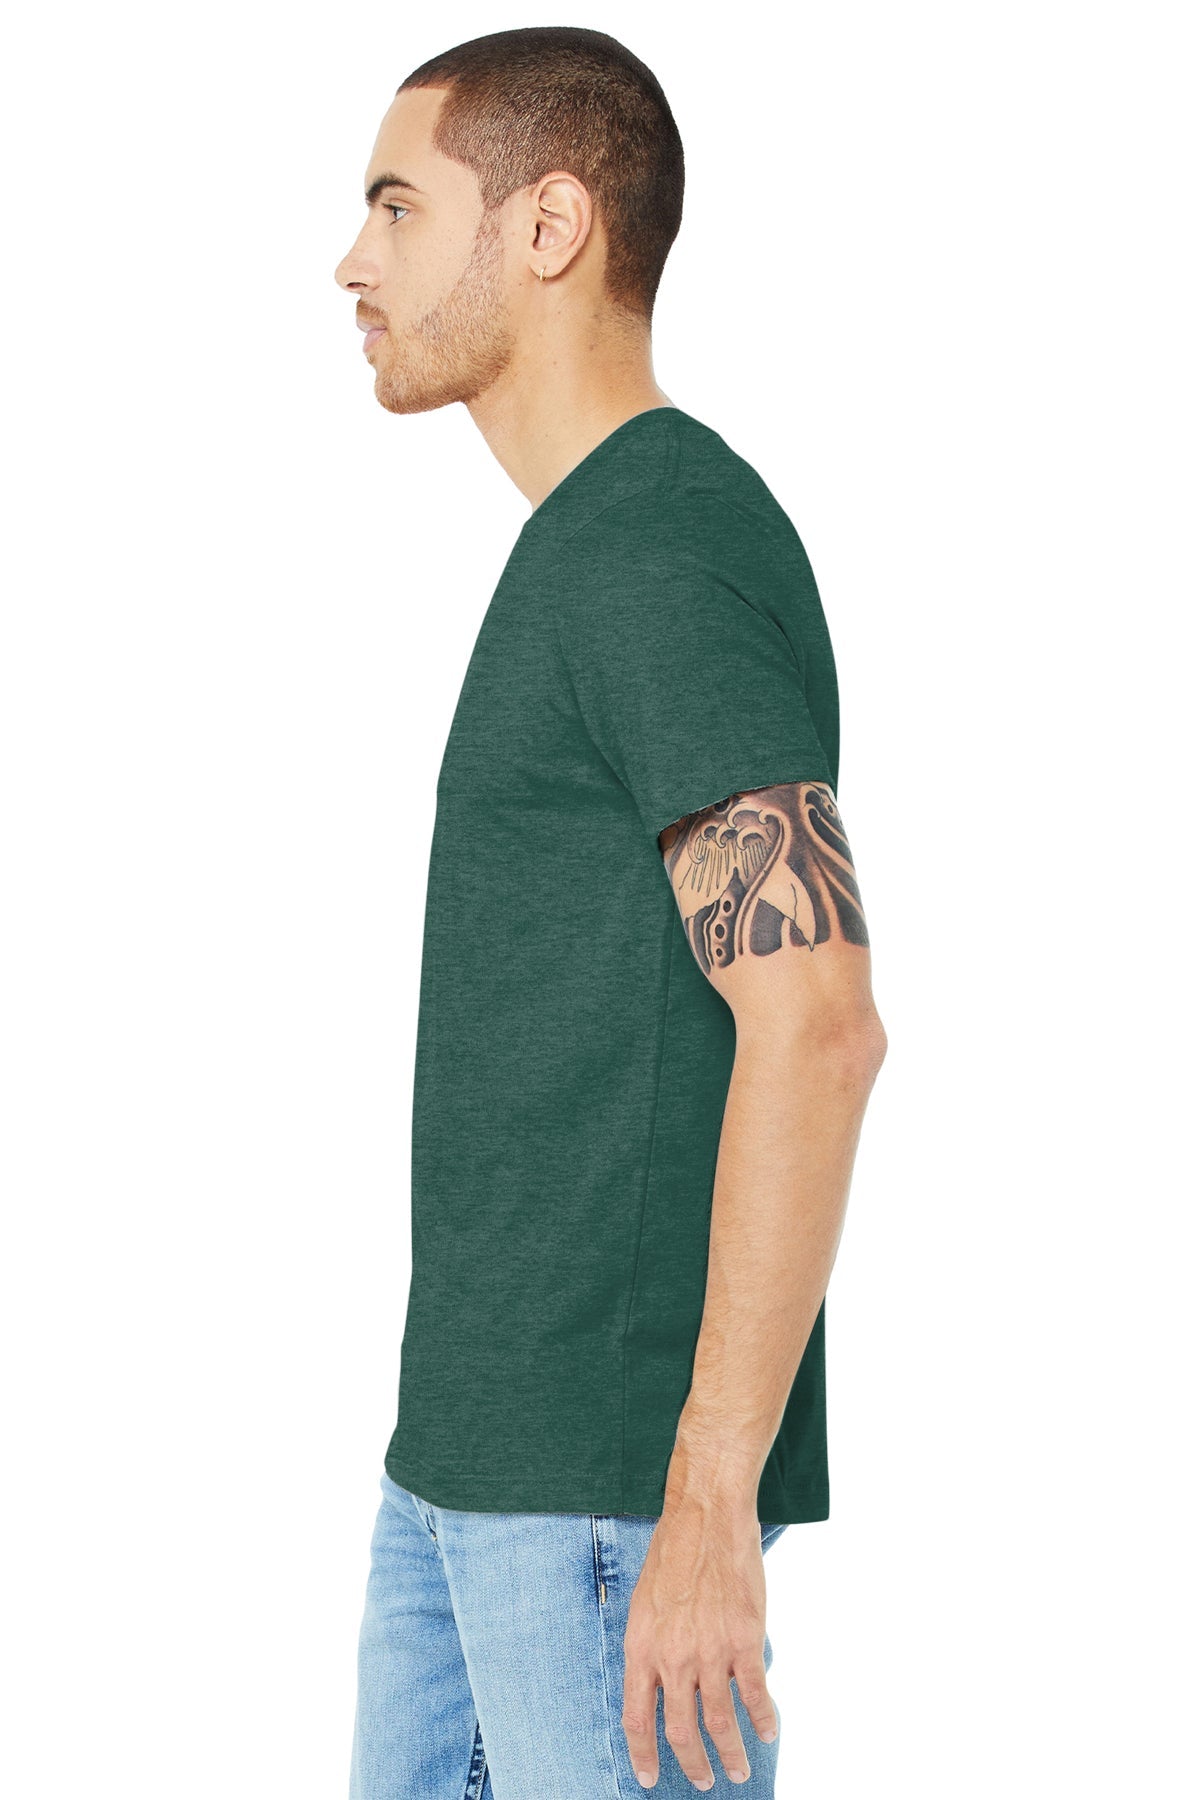 bella + canvas unisex jersey short sleeve t-shirt 3001c heather forest